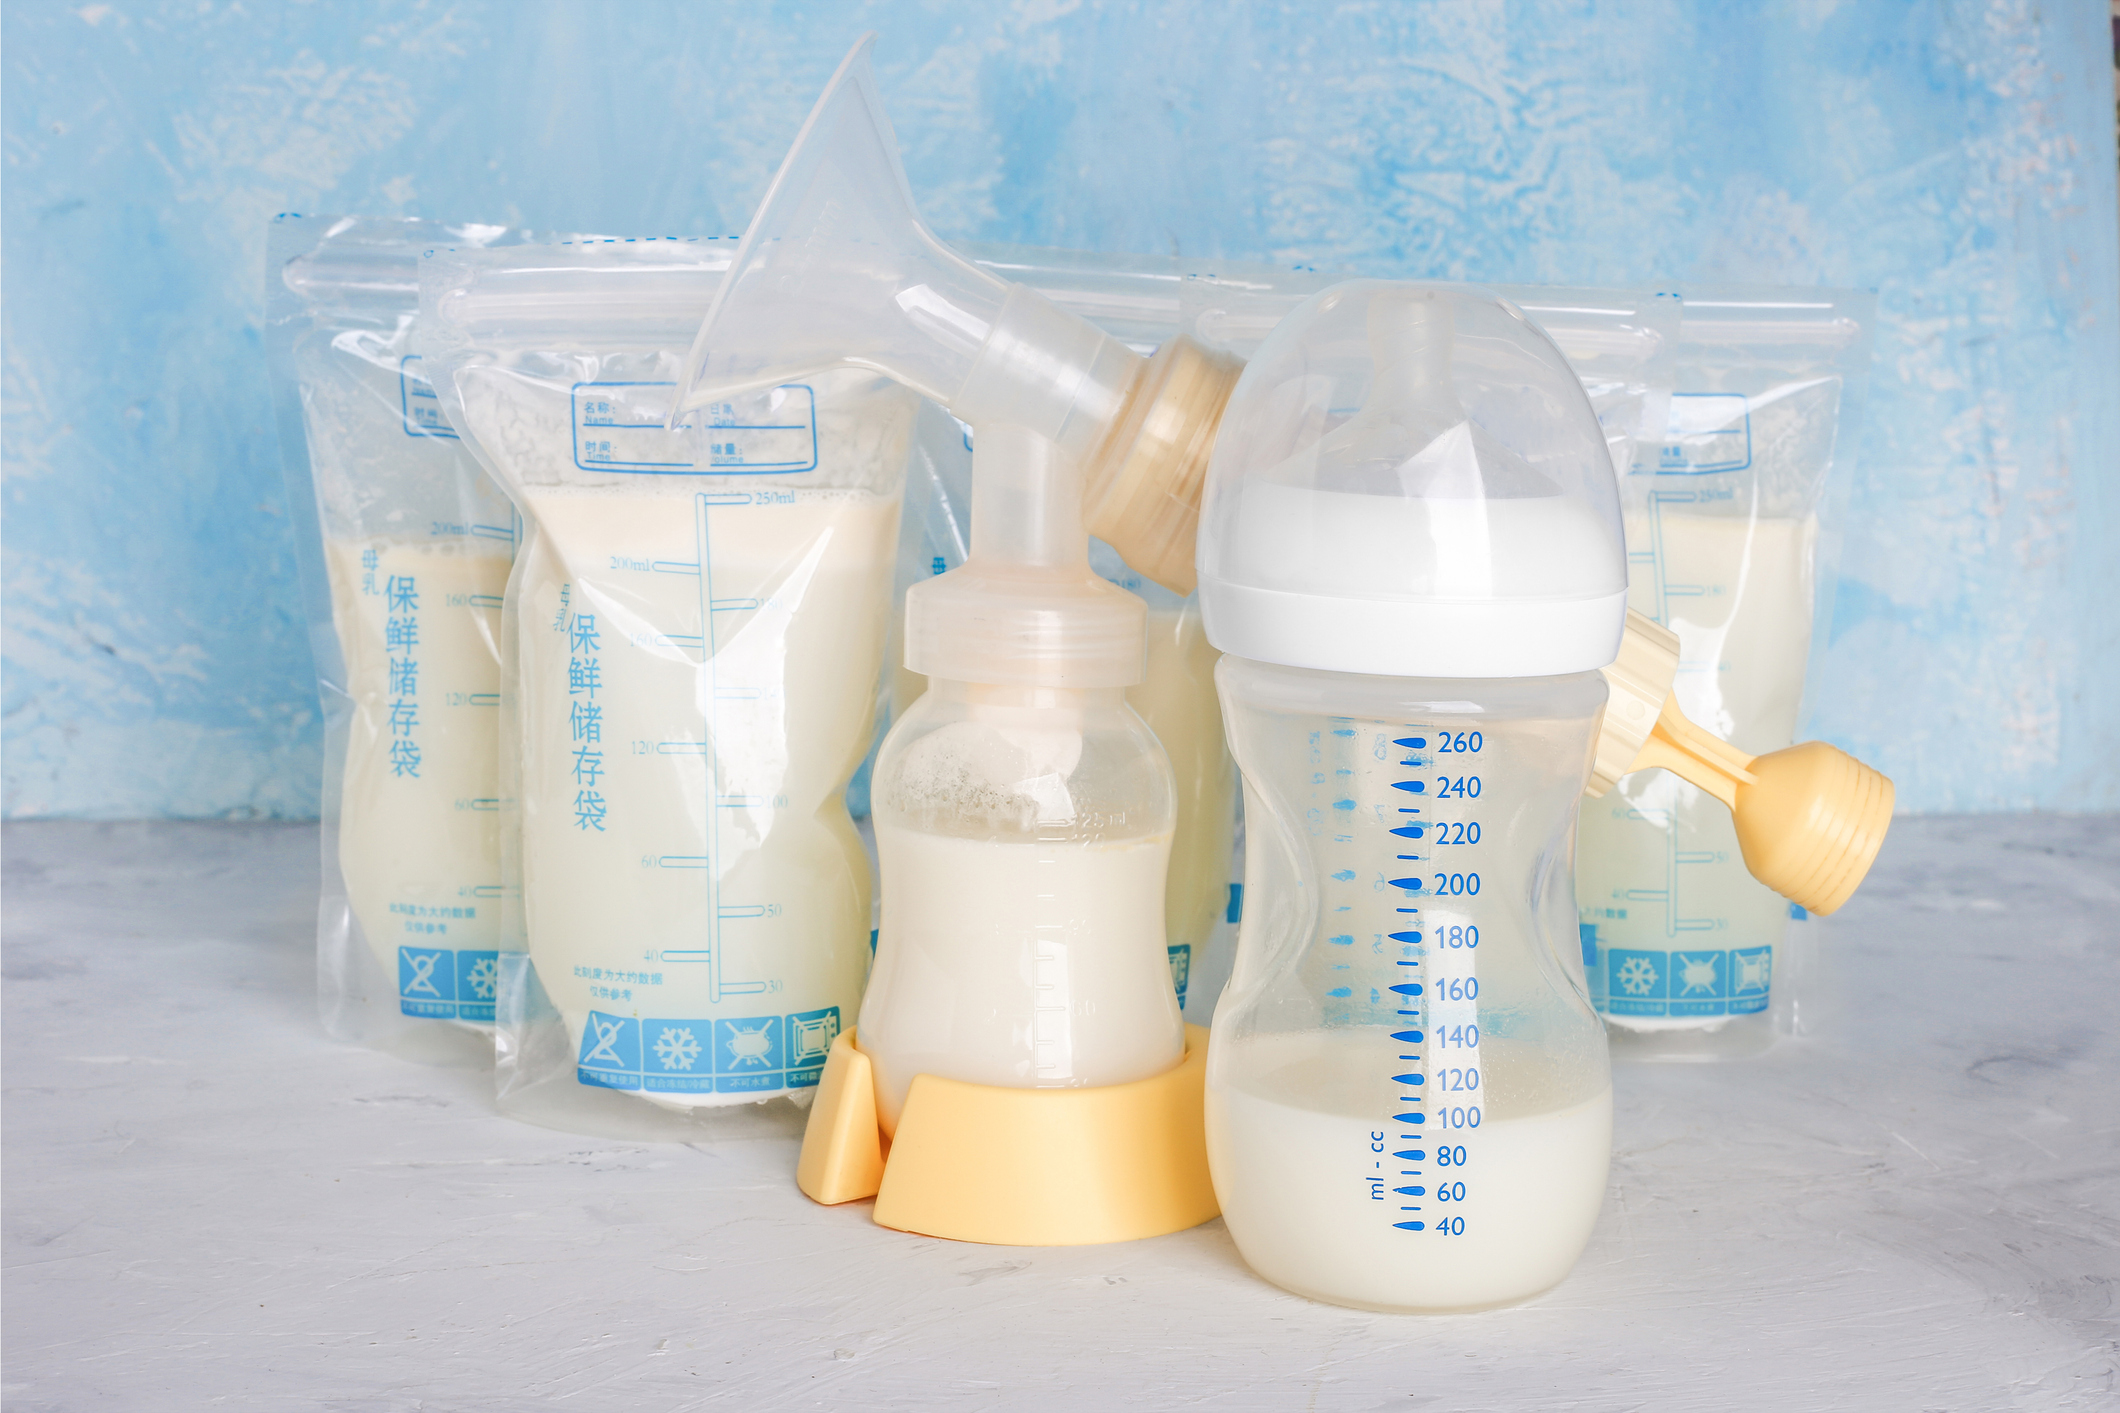 Bags of breastmilk defrosting with baby bottles